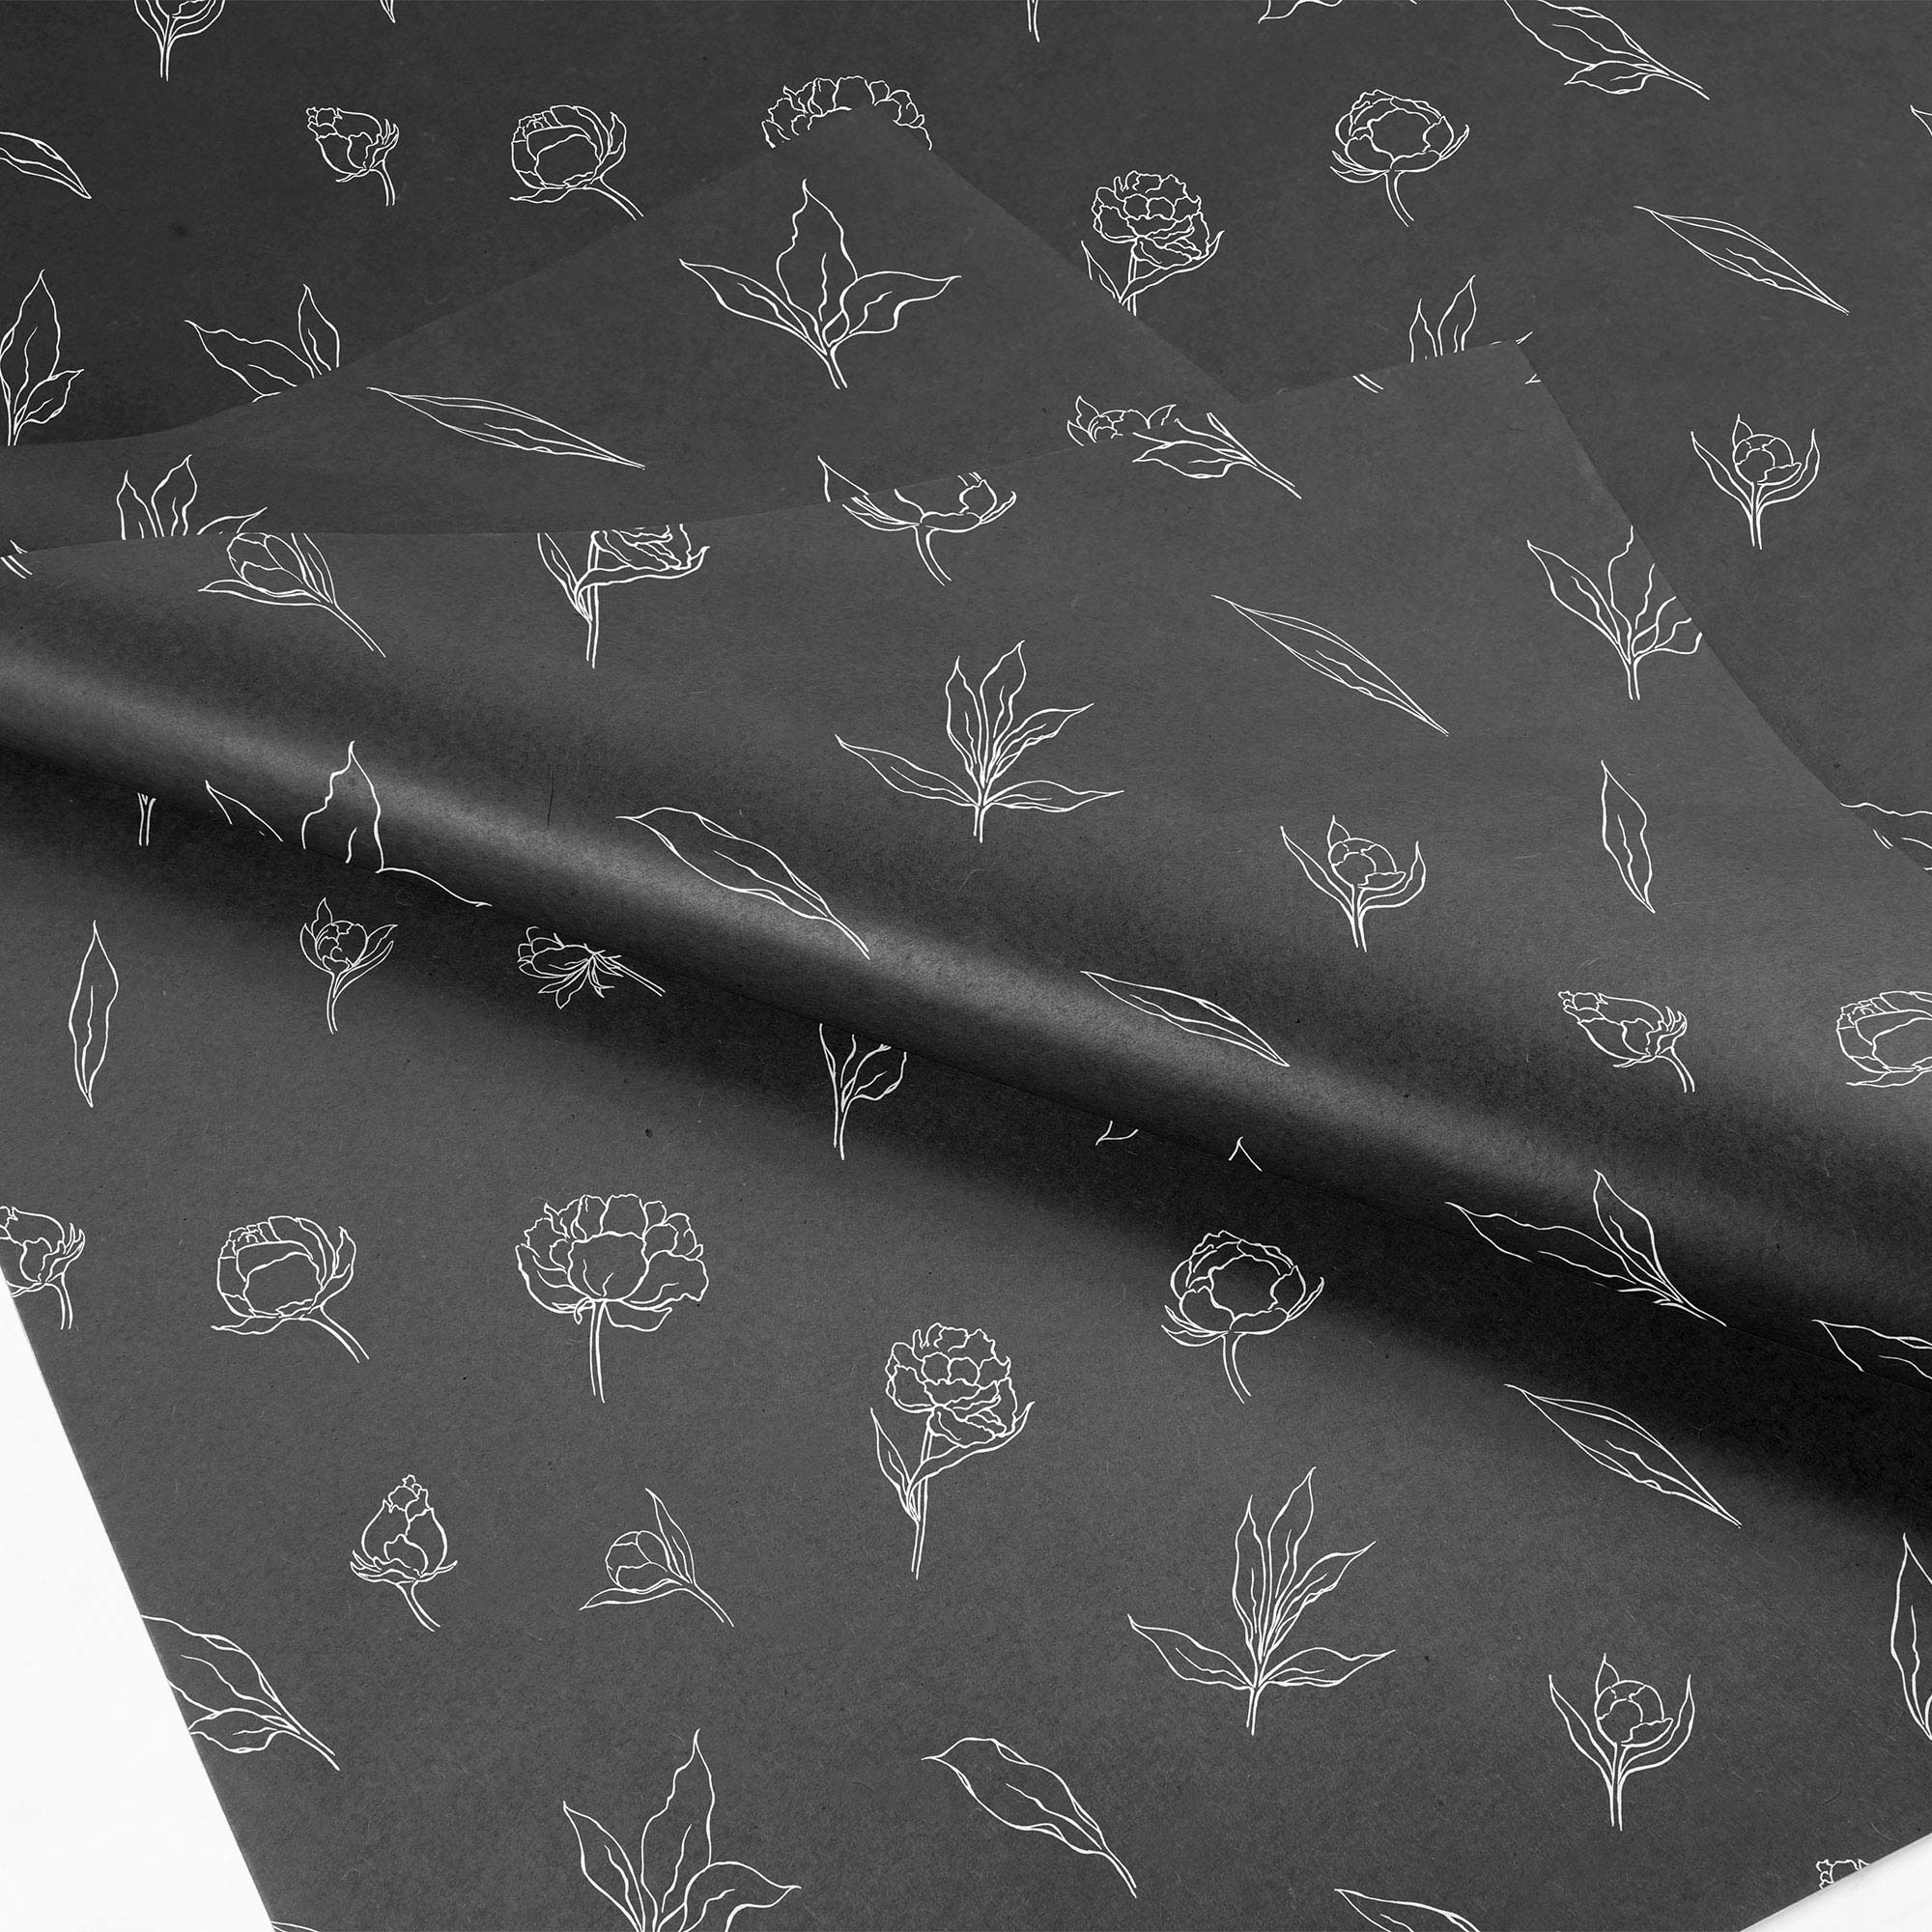 Karolina Król Studio custom illustrated sustainable noissue tissue custom illustrated paper pattern 